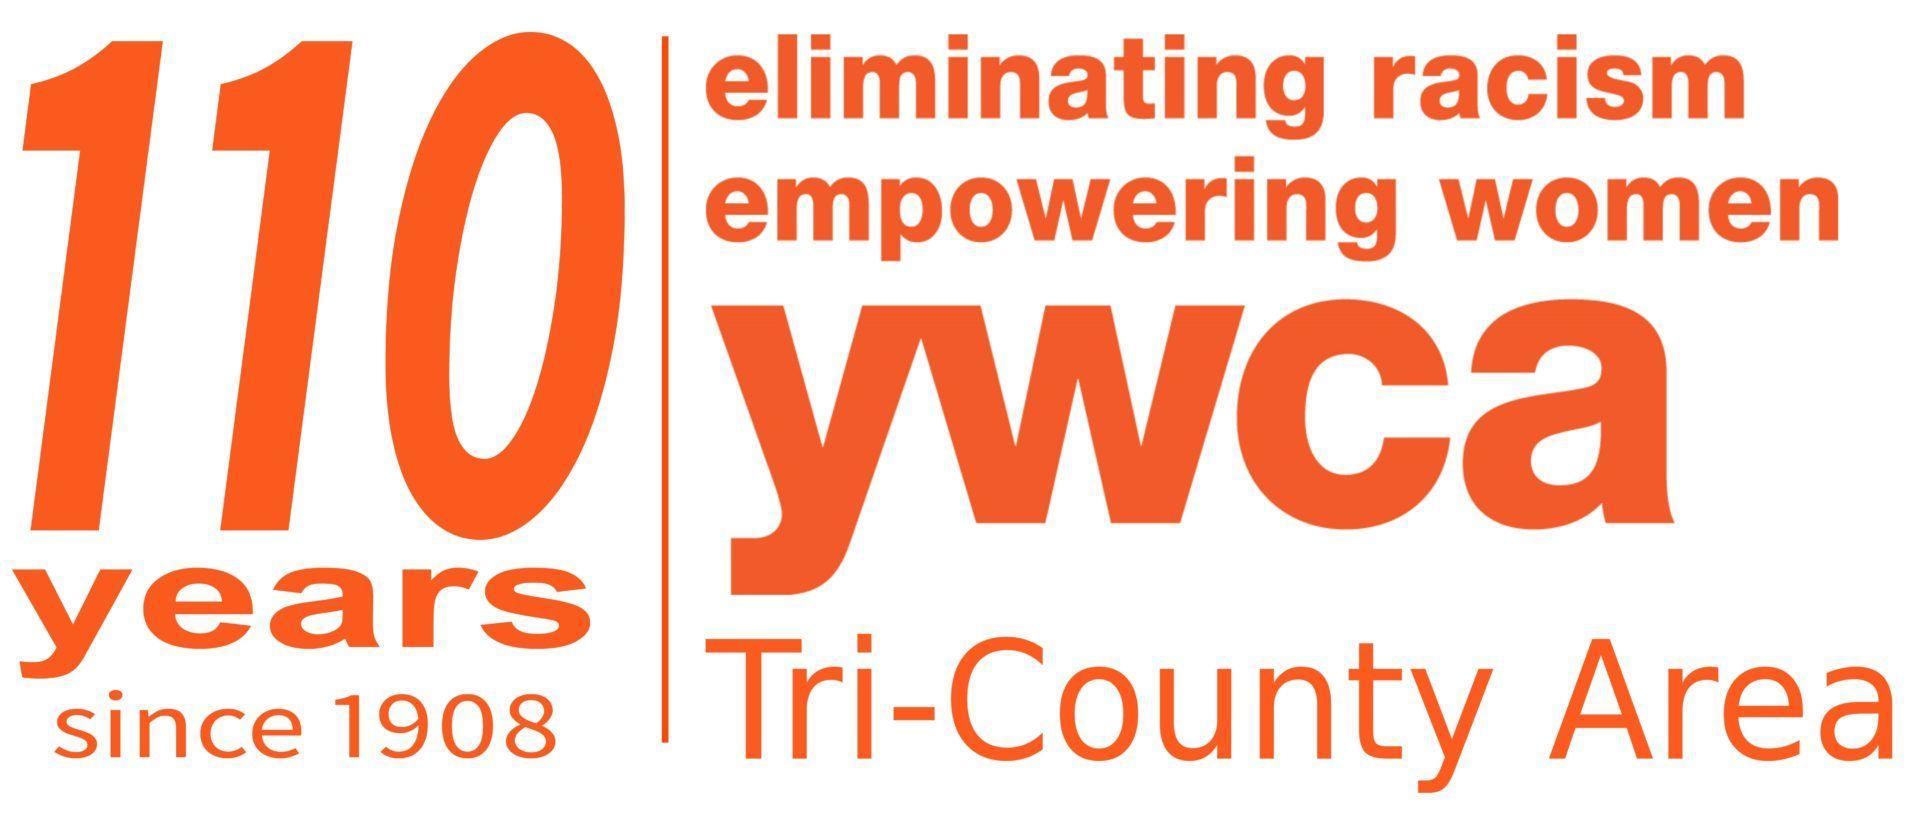 YWCA Logo - YWCA Tri-County Area - Eliminating Racism, Empowering Women